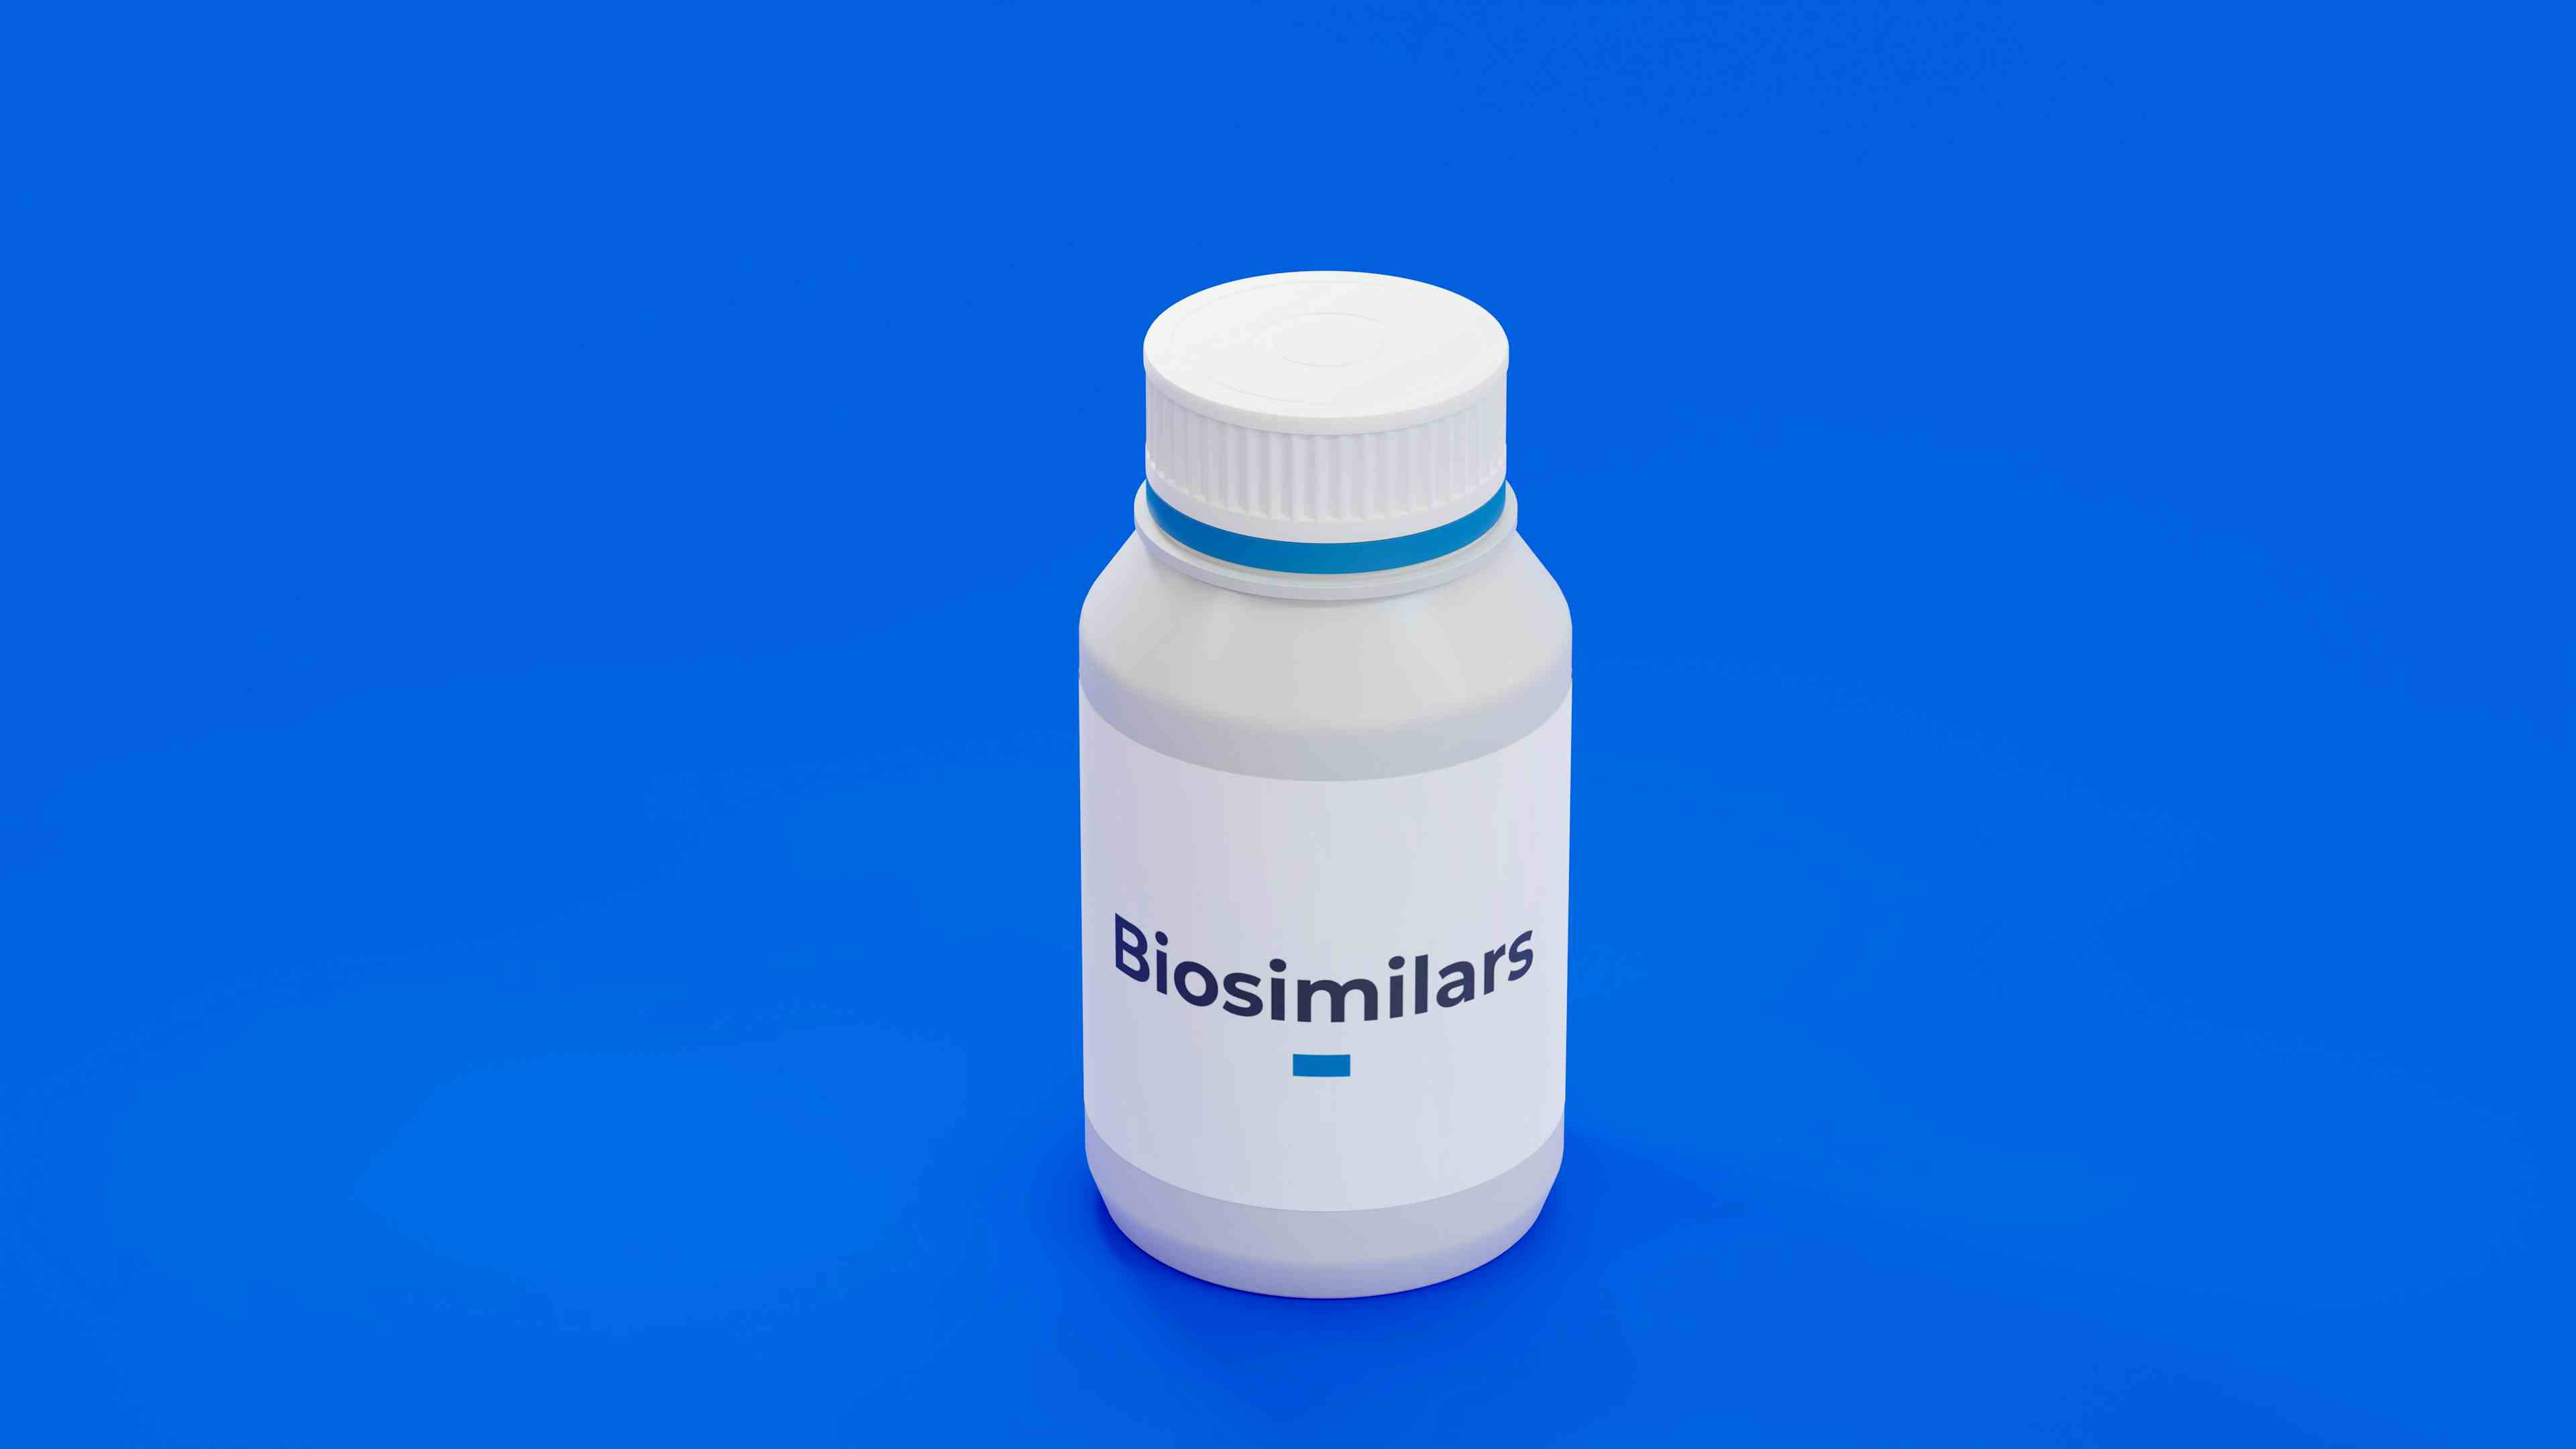 Biosimilar pharmaceutical drug bottle on blue background. | Image Credit: Carl - stock.adobe.com